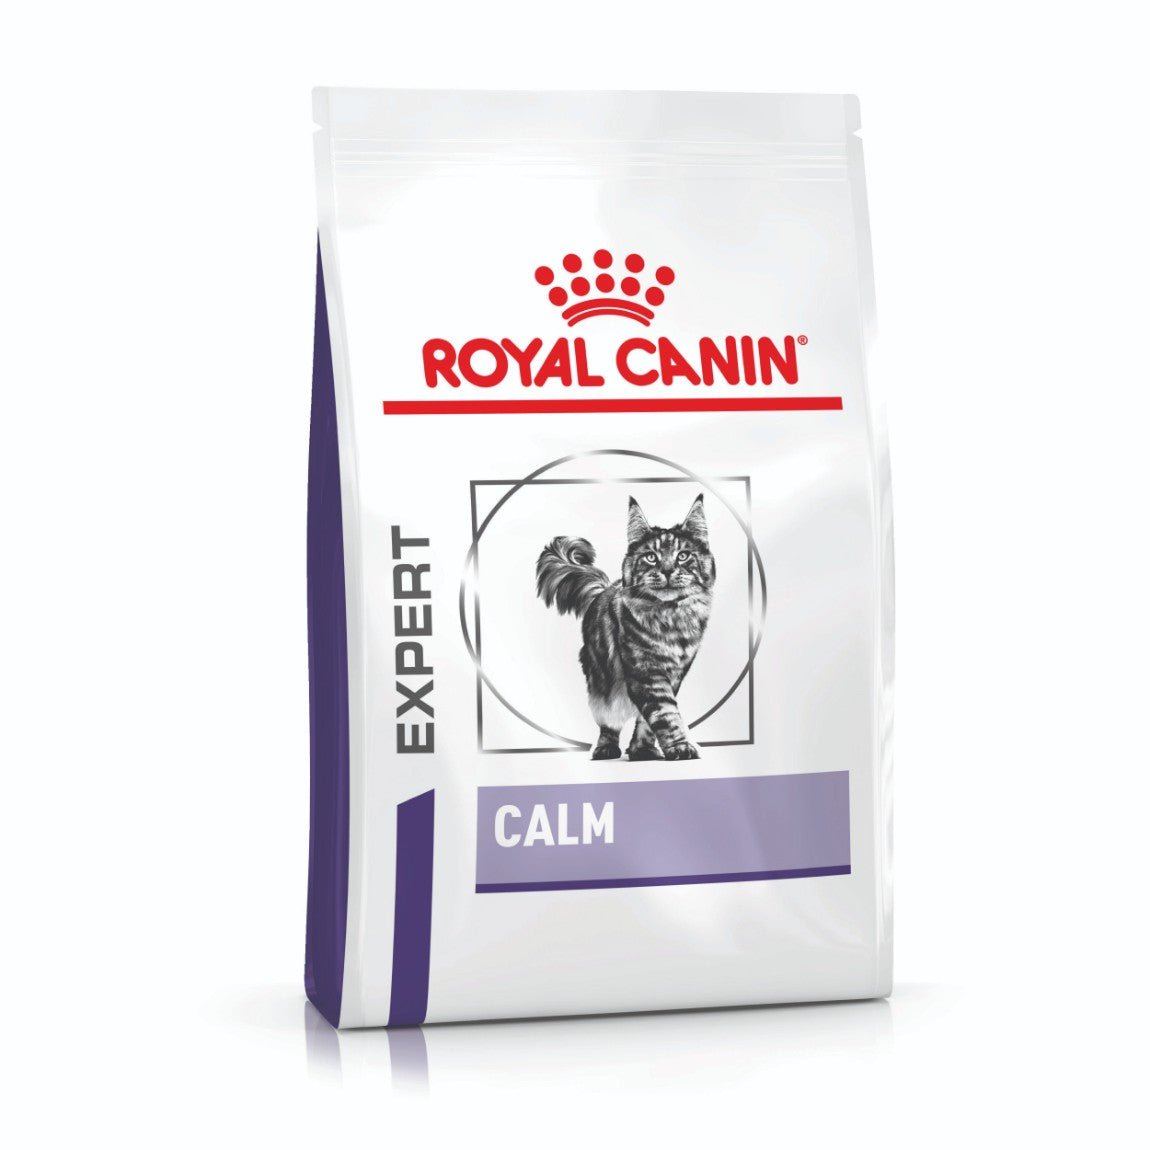 Royal Canin Calm Dry Cat Food